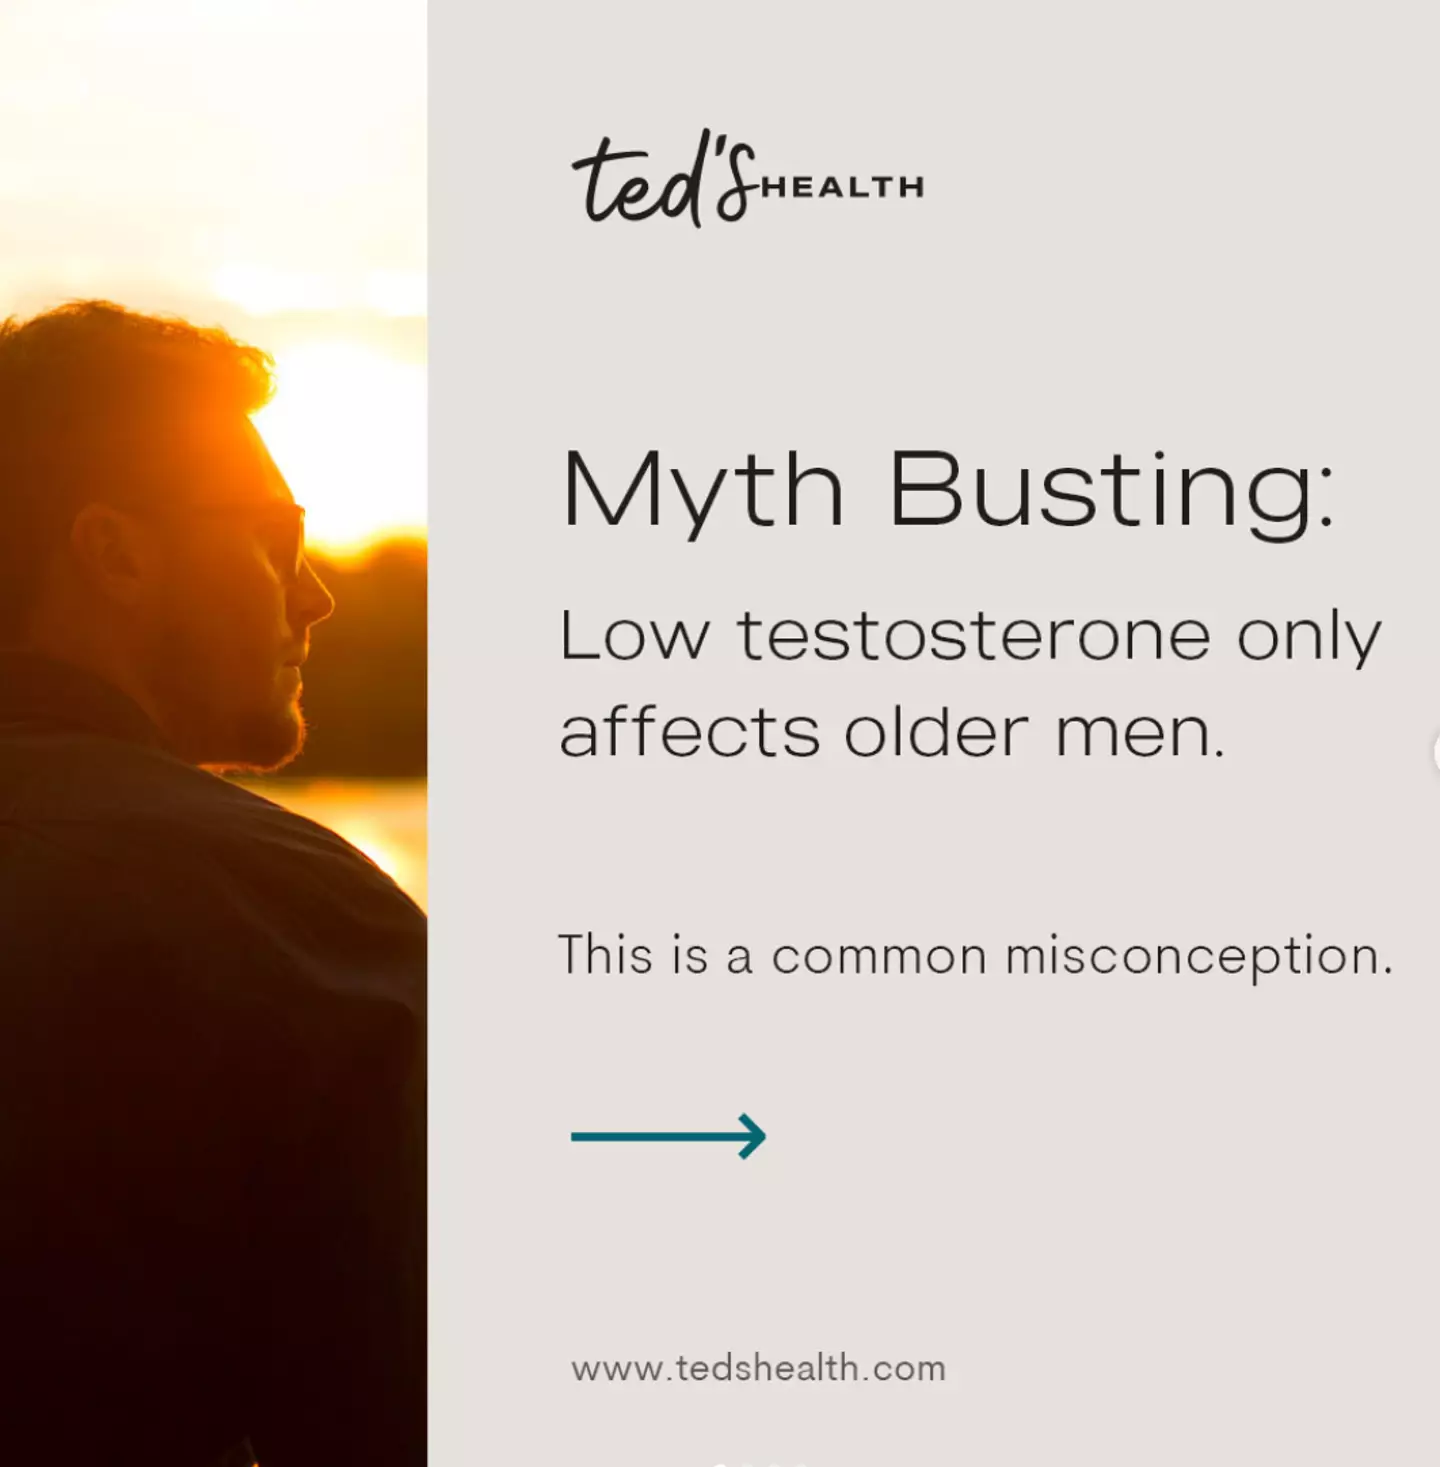 Testosterone deficiency doesn't just affect older men.